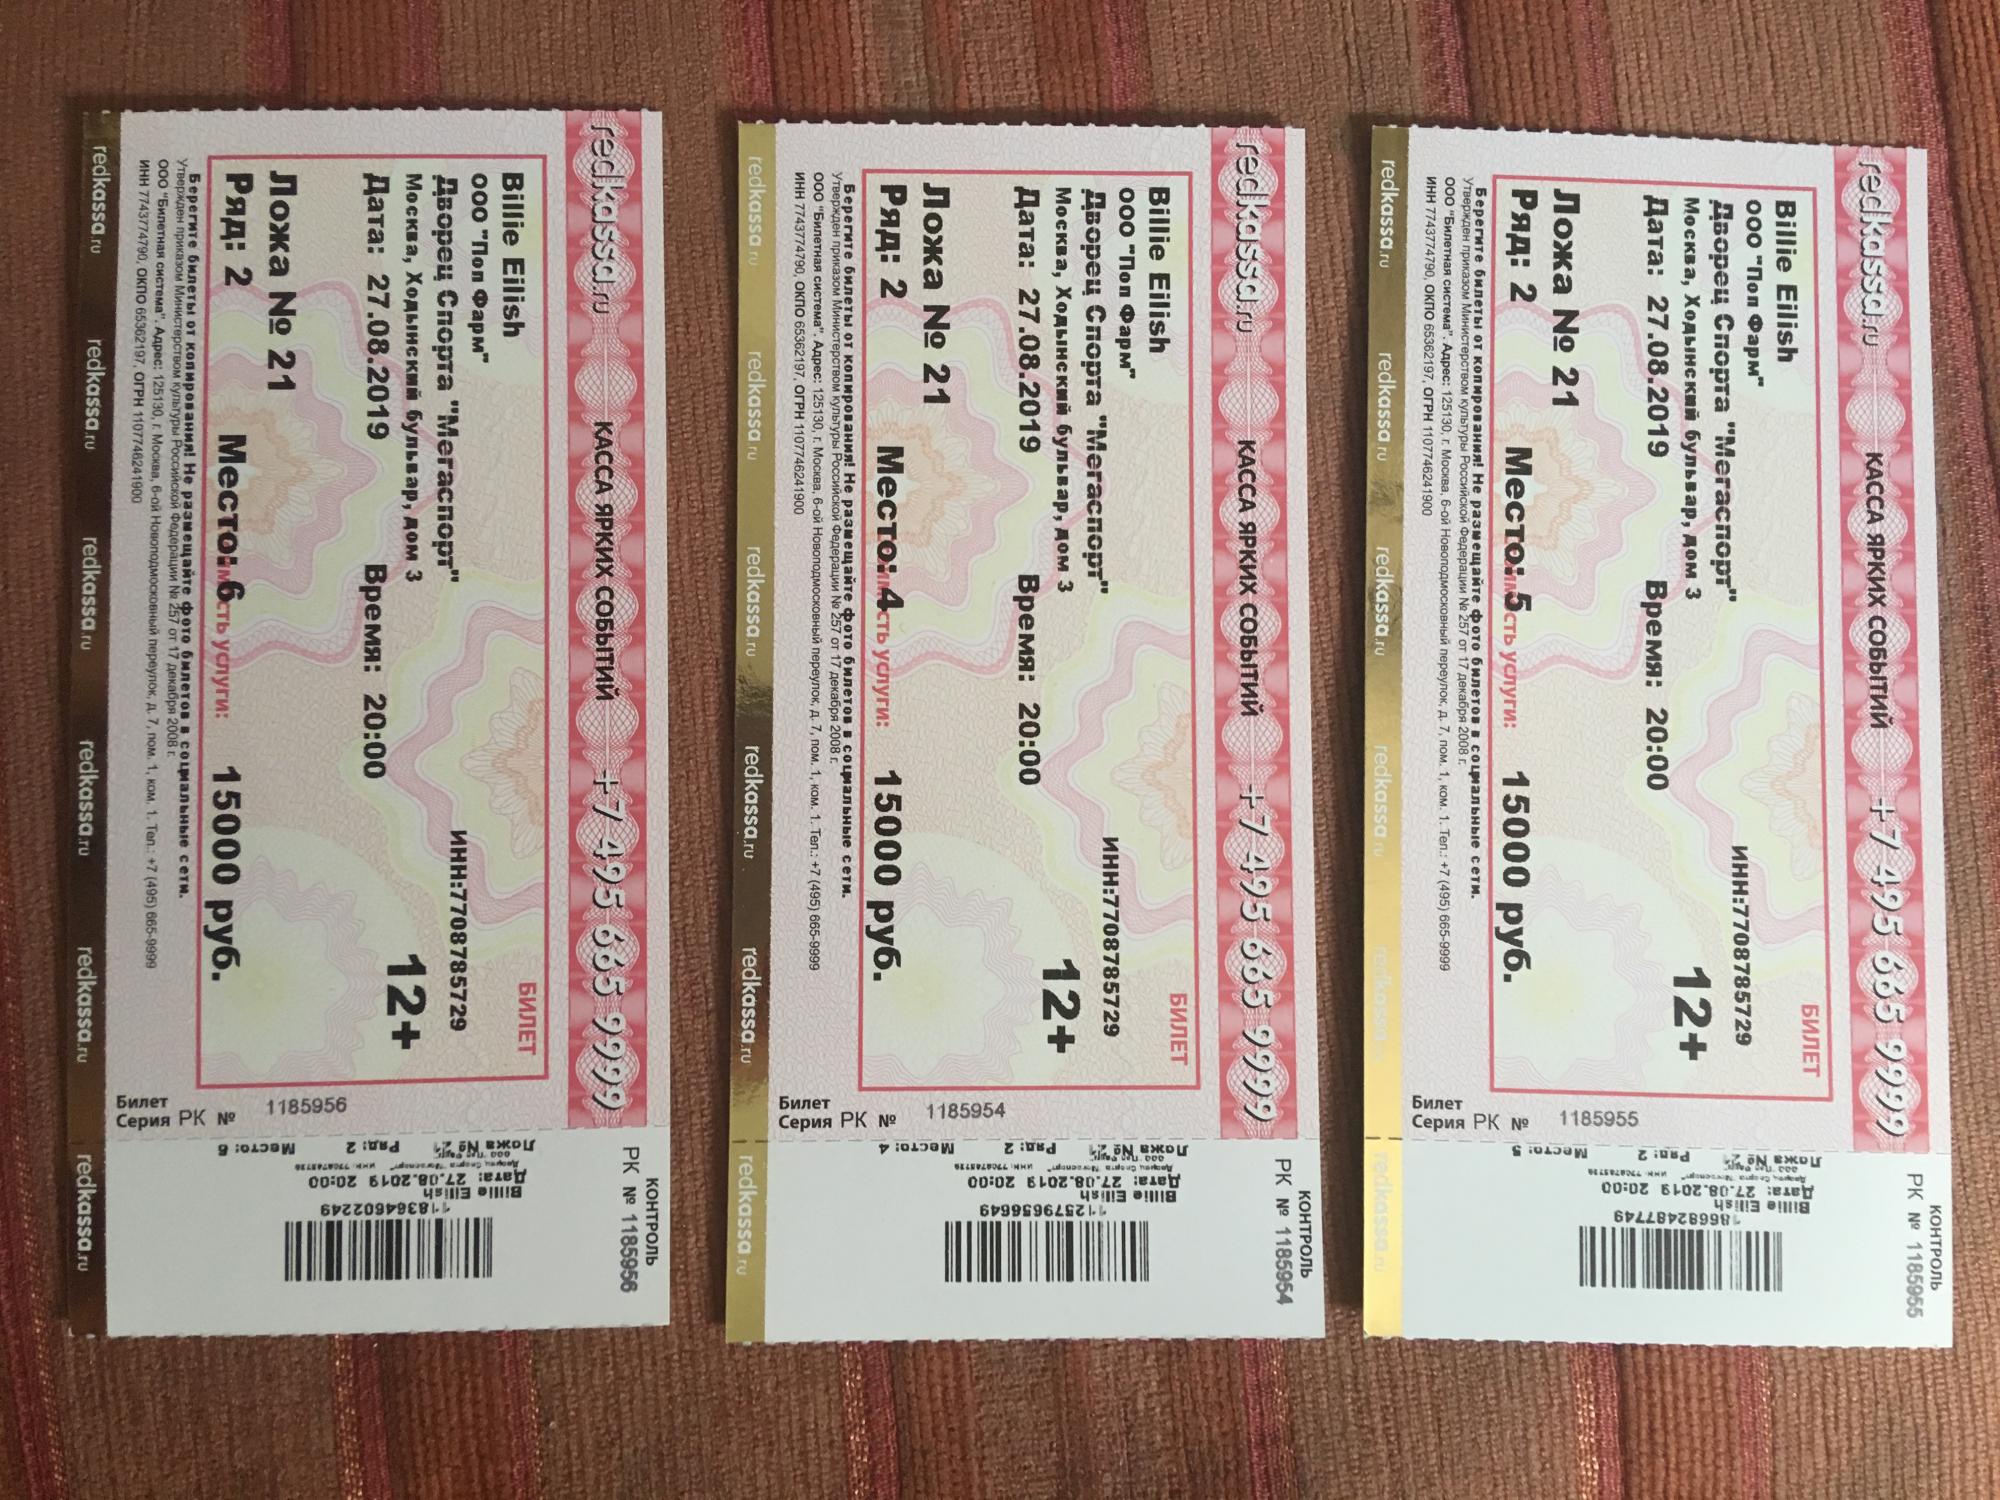 Фото билета на концерт. Билет на концерт. Шуточный билет на концерт. Билет на концерт Джонни. Билет Билли Айлиш.